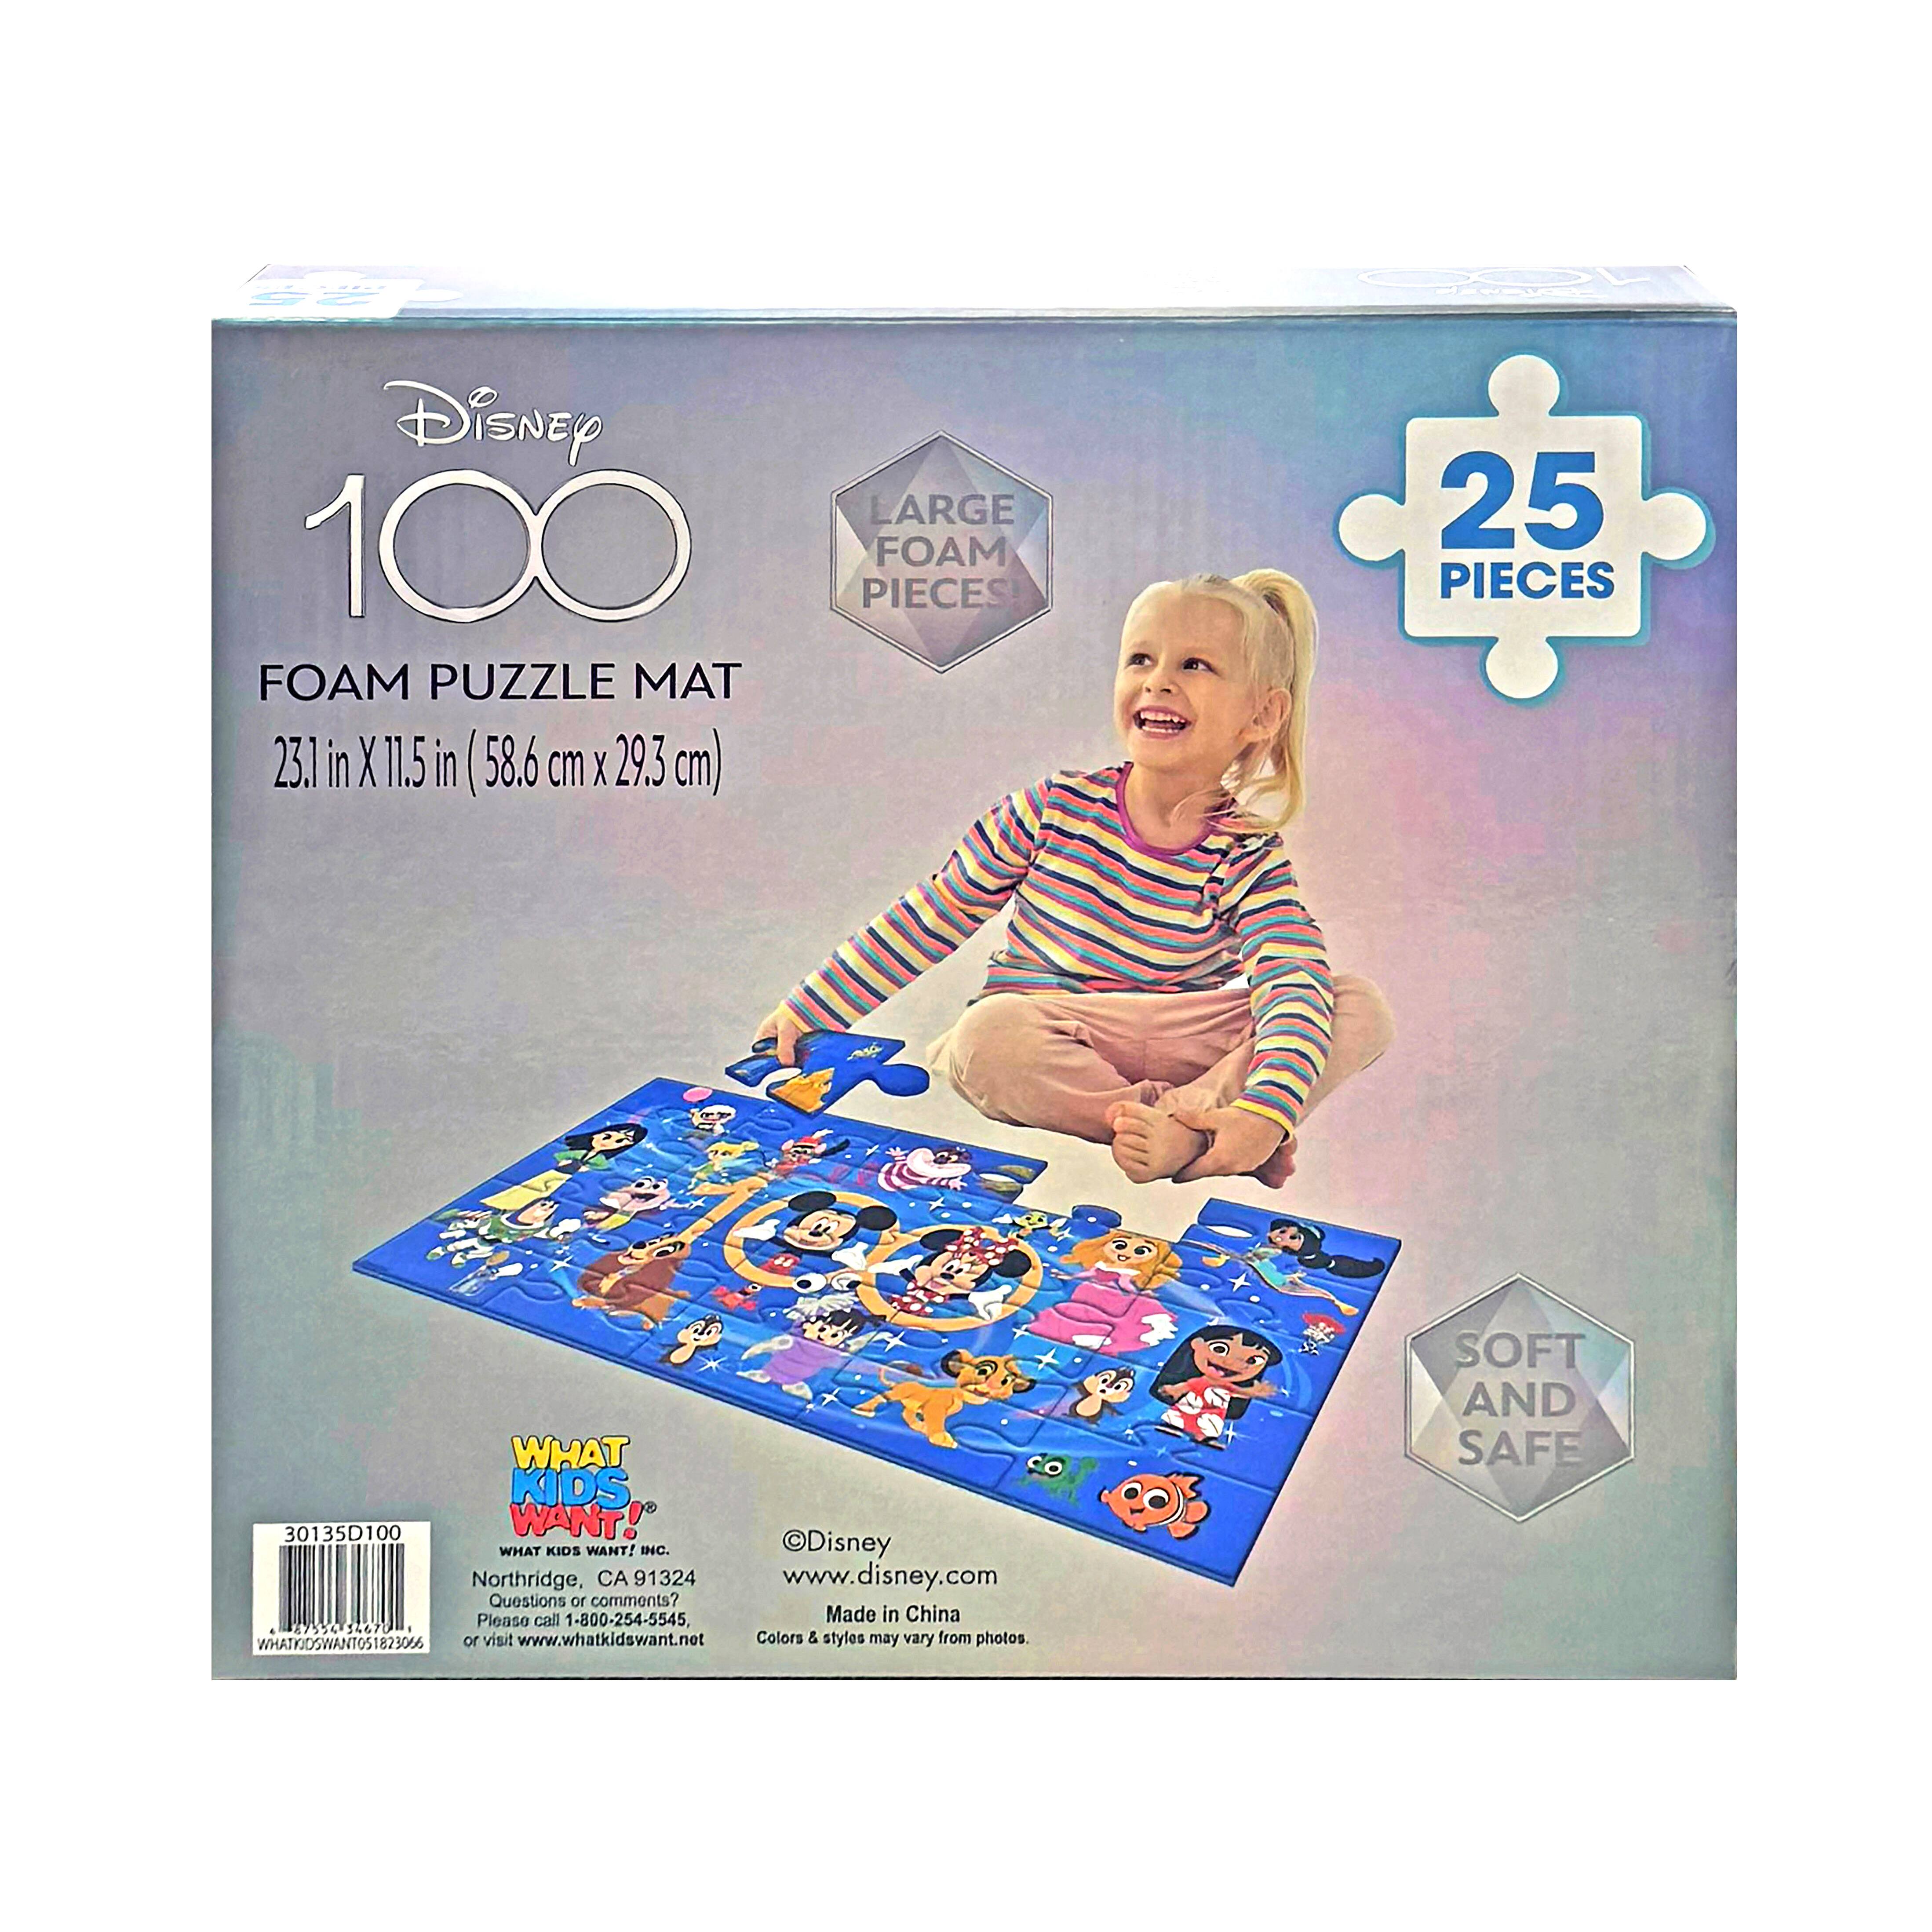 Disney Minnie Mouse 25 Piece Foam Puzzle